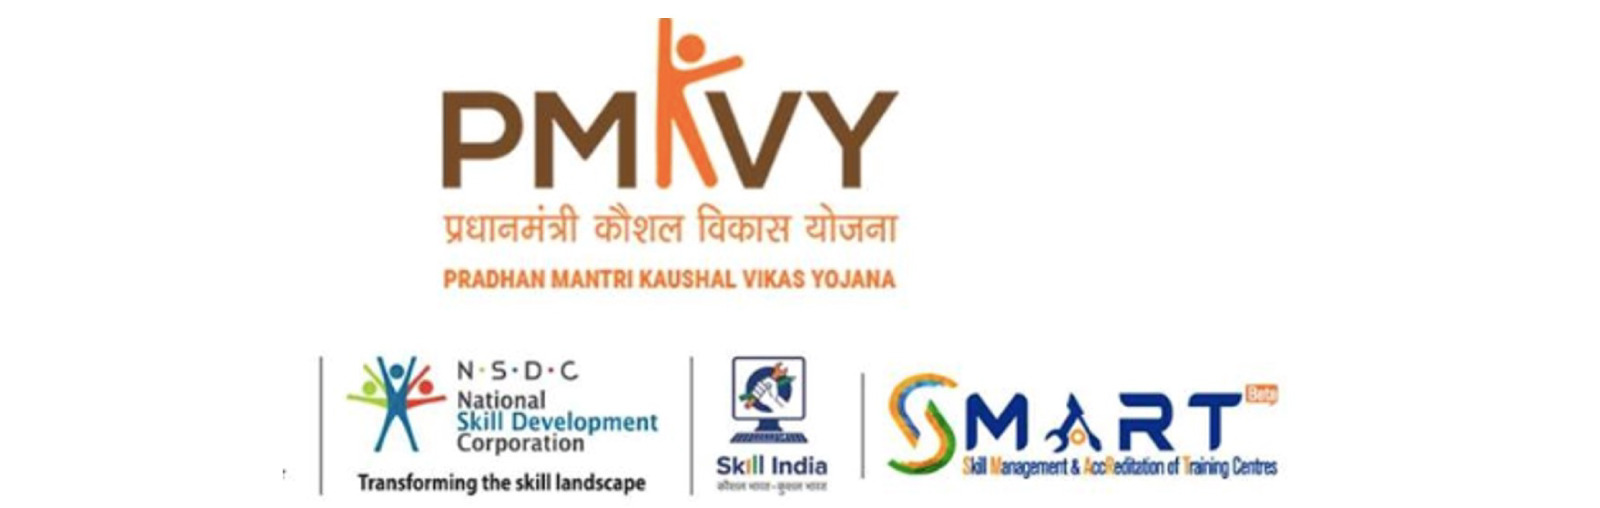 PMKVY Scheme (Pradhan Mantri Kaushal Vikas Yojana): Everything You Need to Know What is Pradhan Mantri Kaushal Vikas Yojana (PMKVY Scheme)?